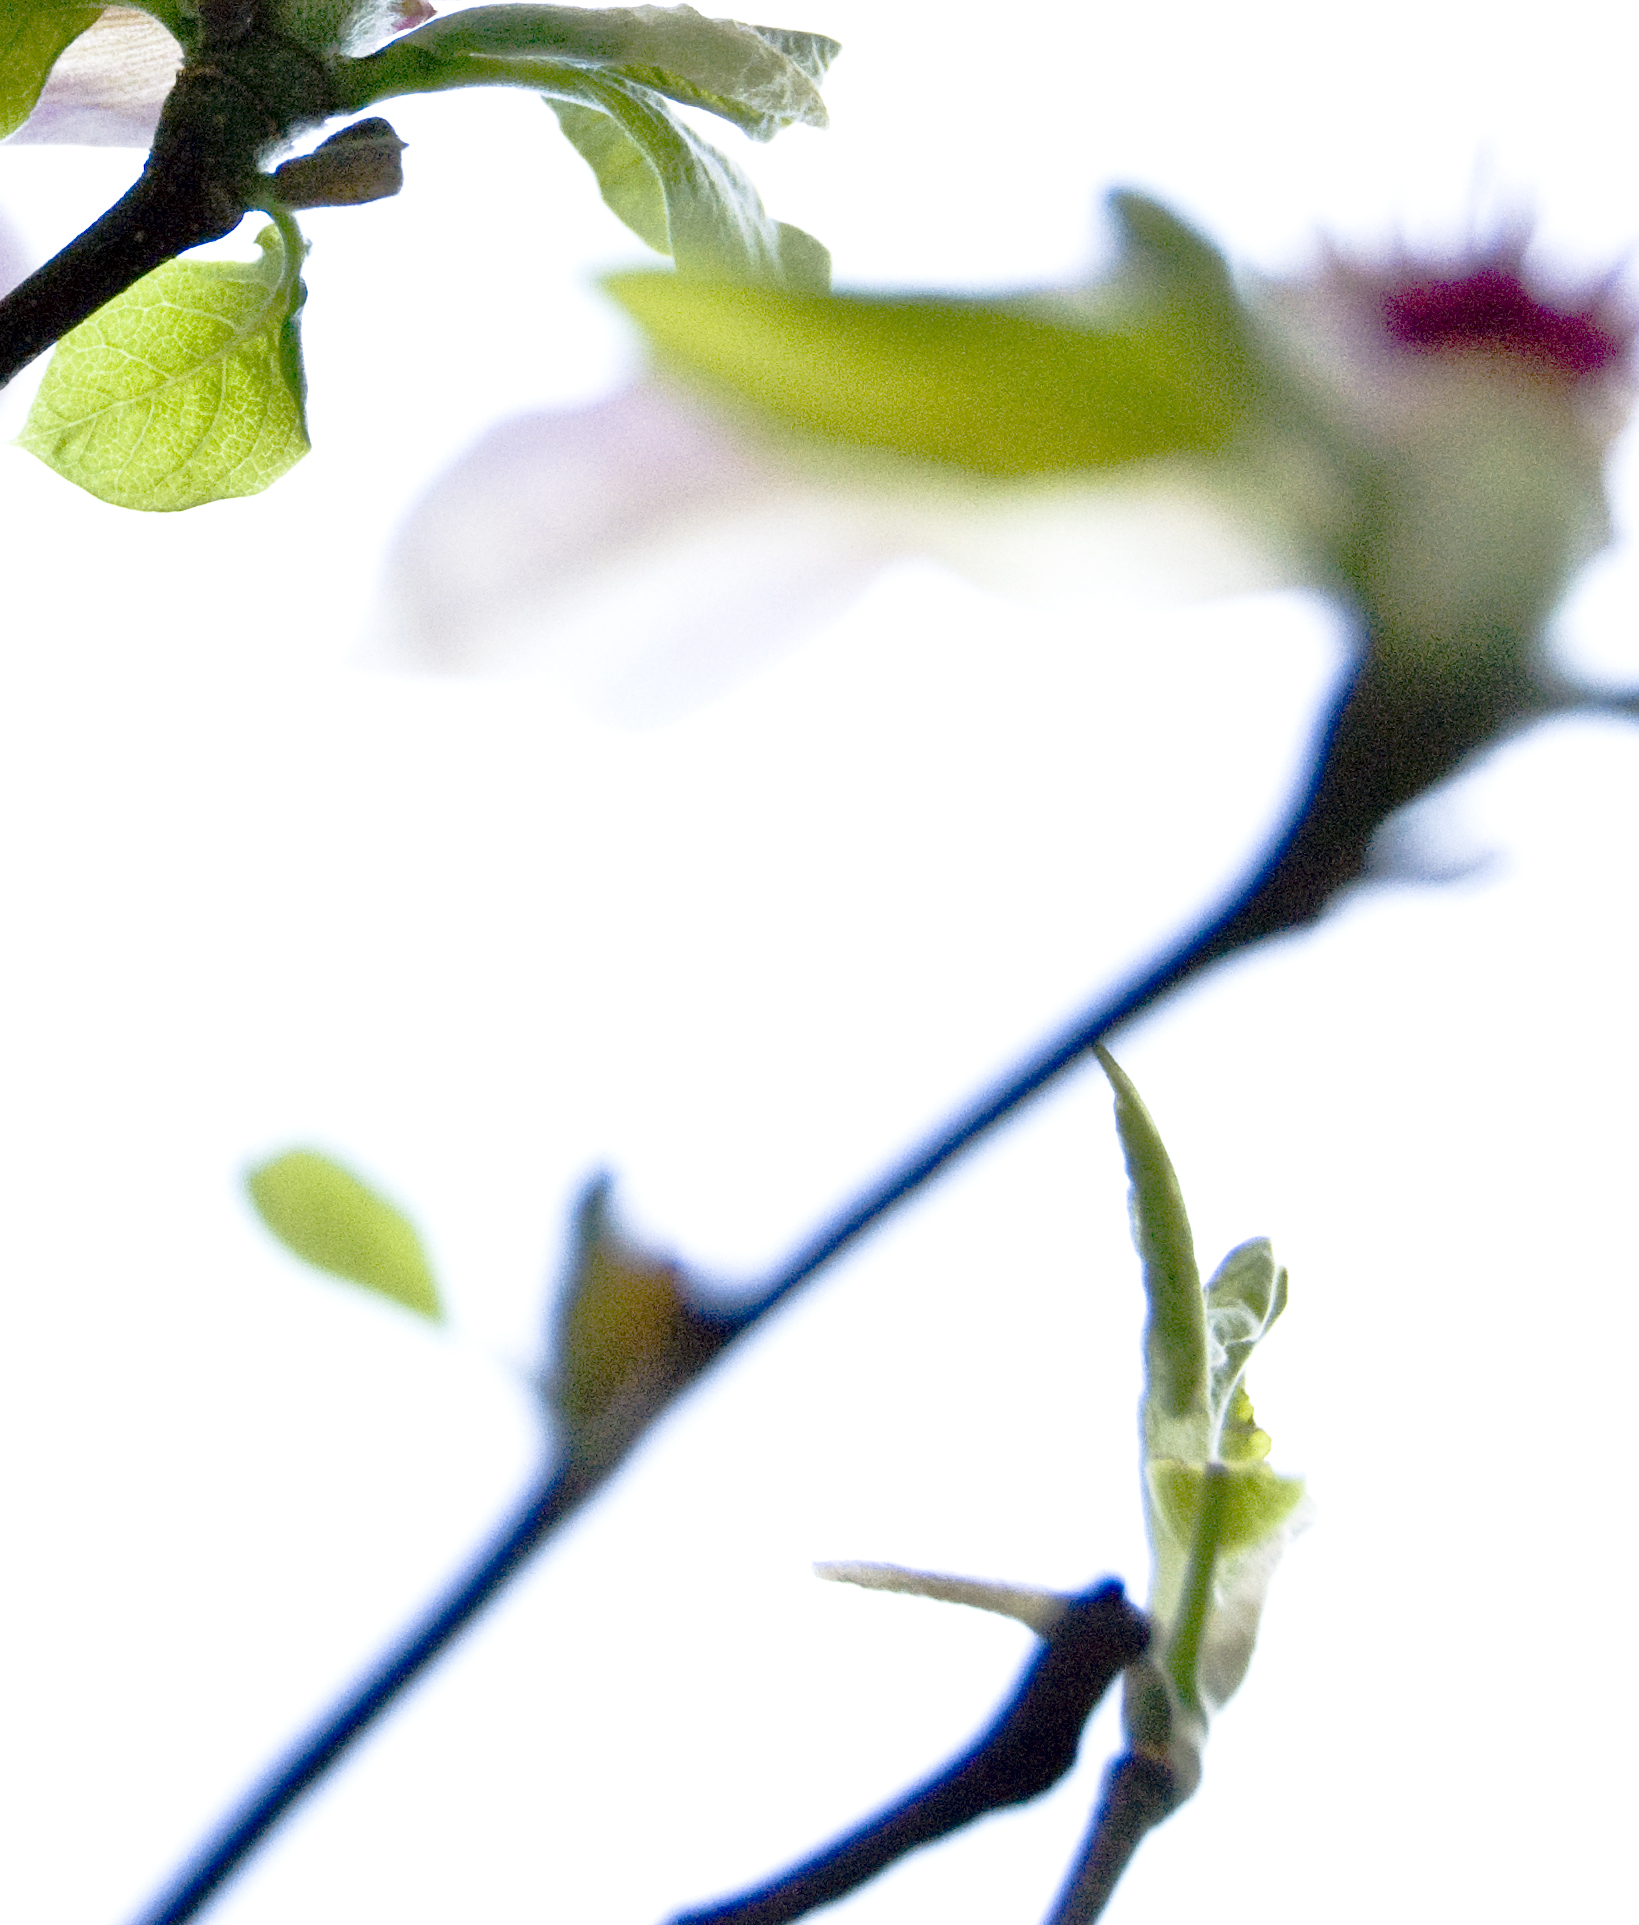 blurred magnolia.jpg